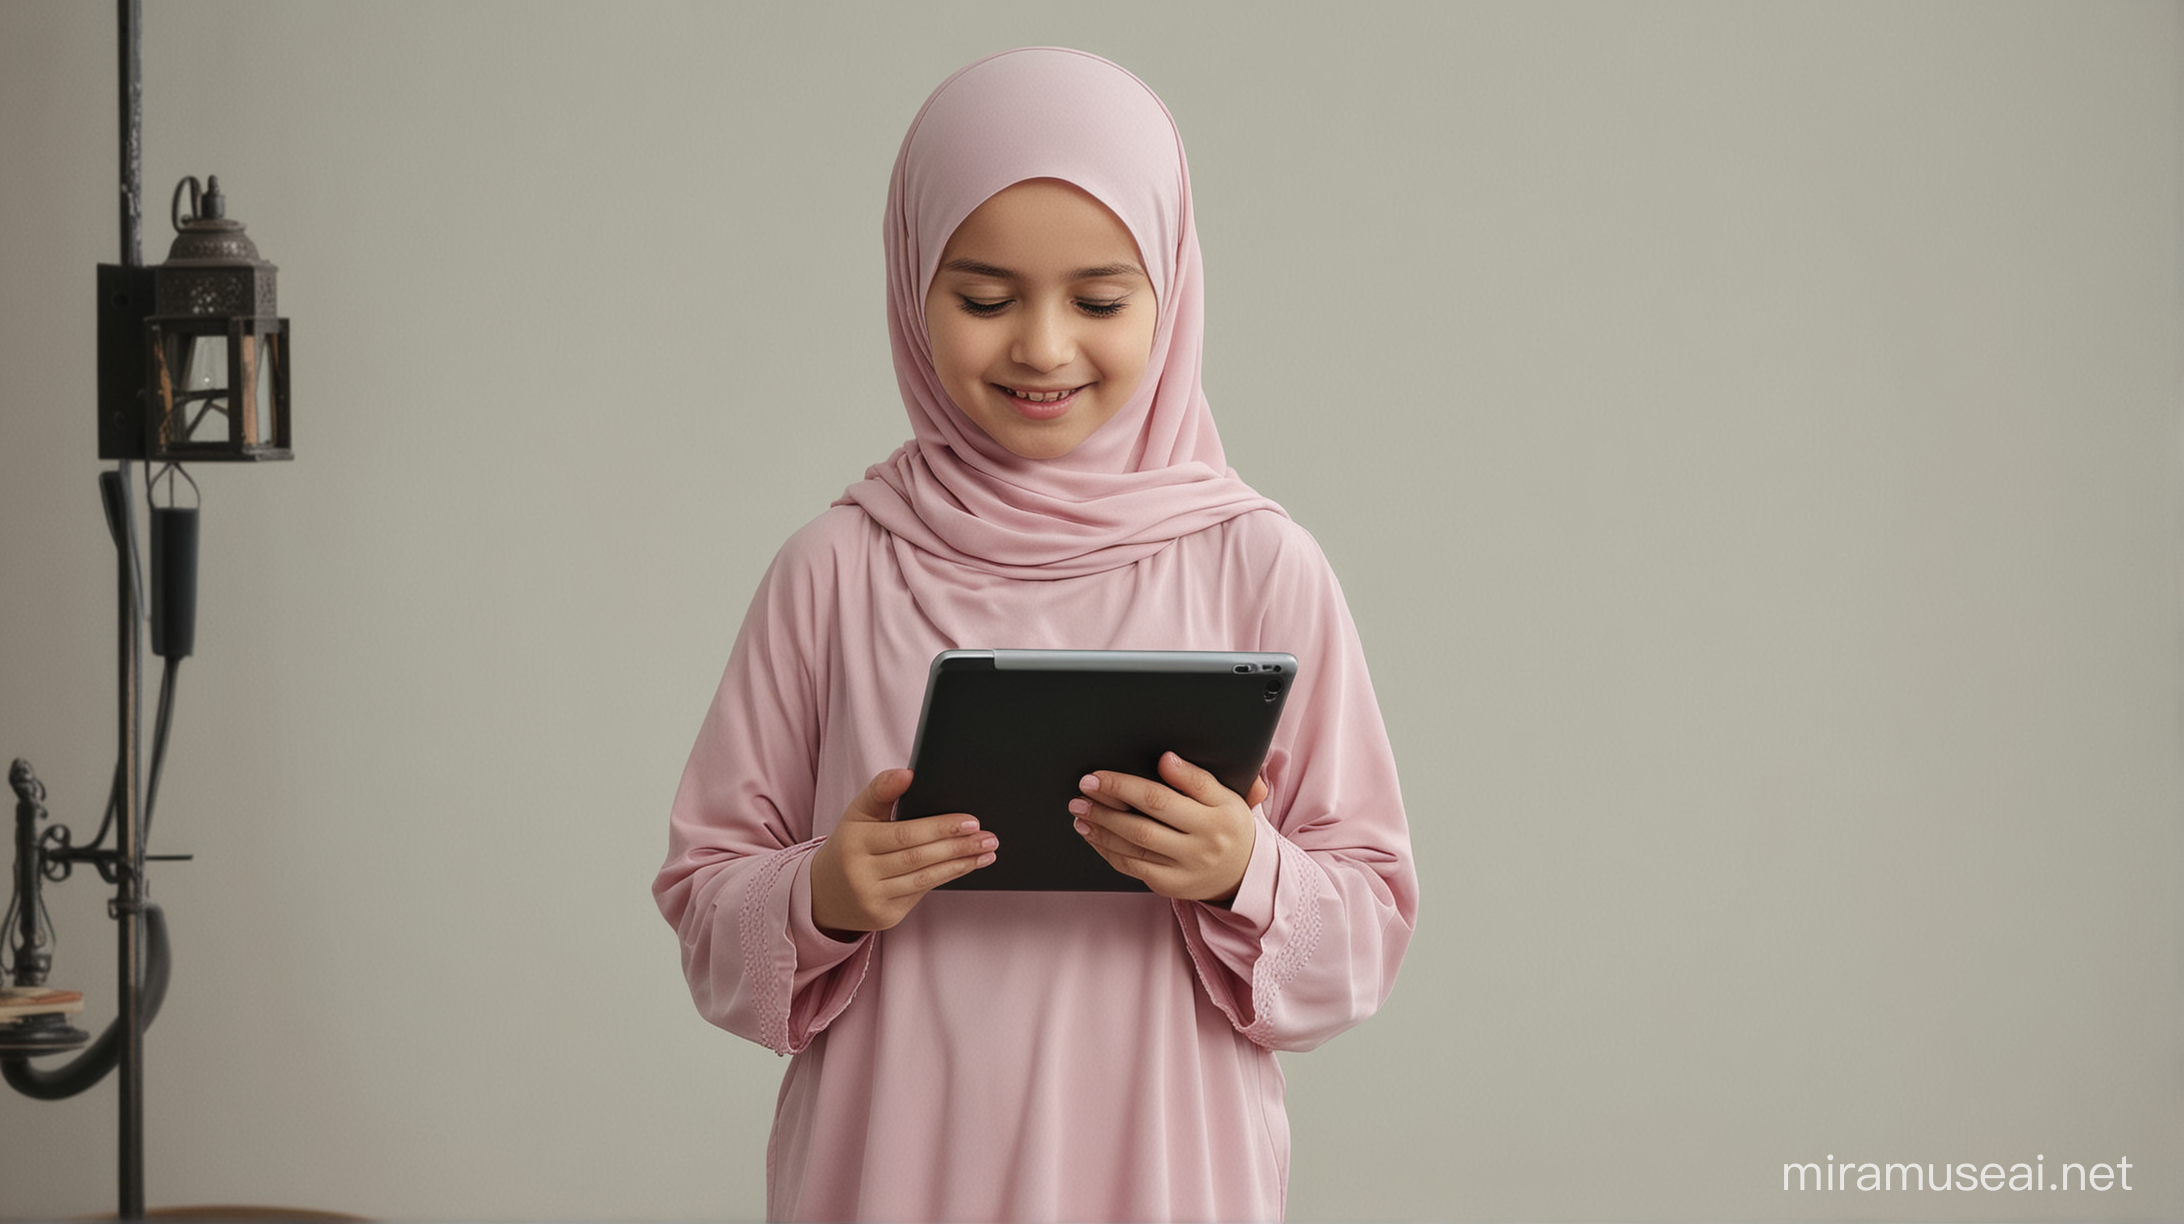 Muslim Girl Studying on iPad Online Islamic Education